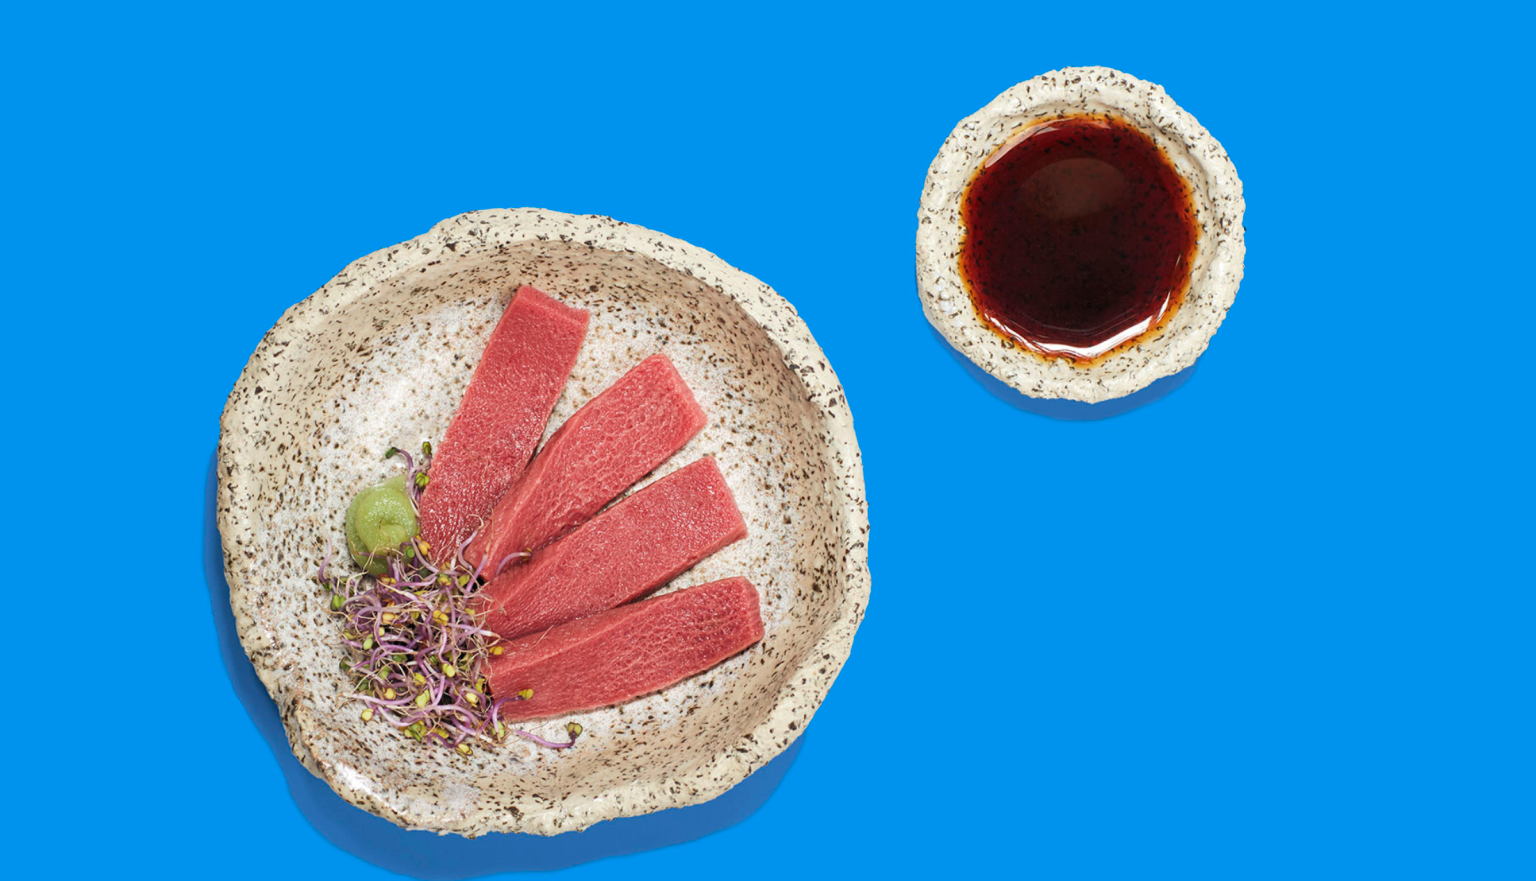 Plant-based tuna set to make a splash